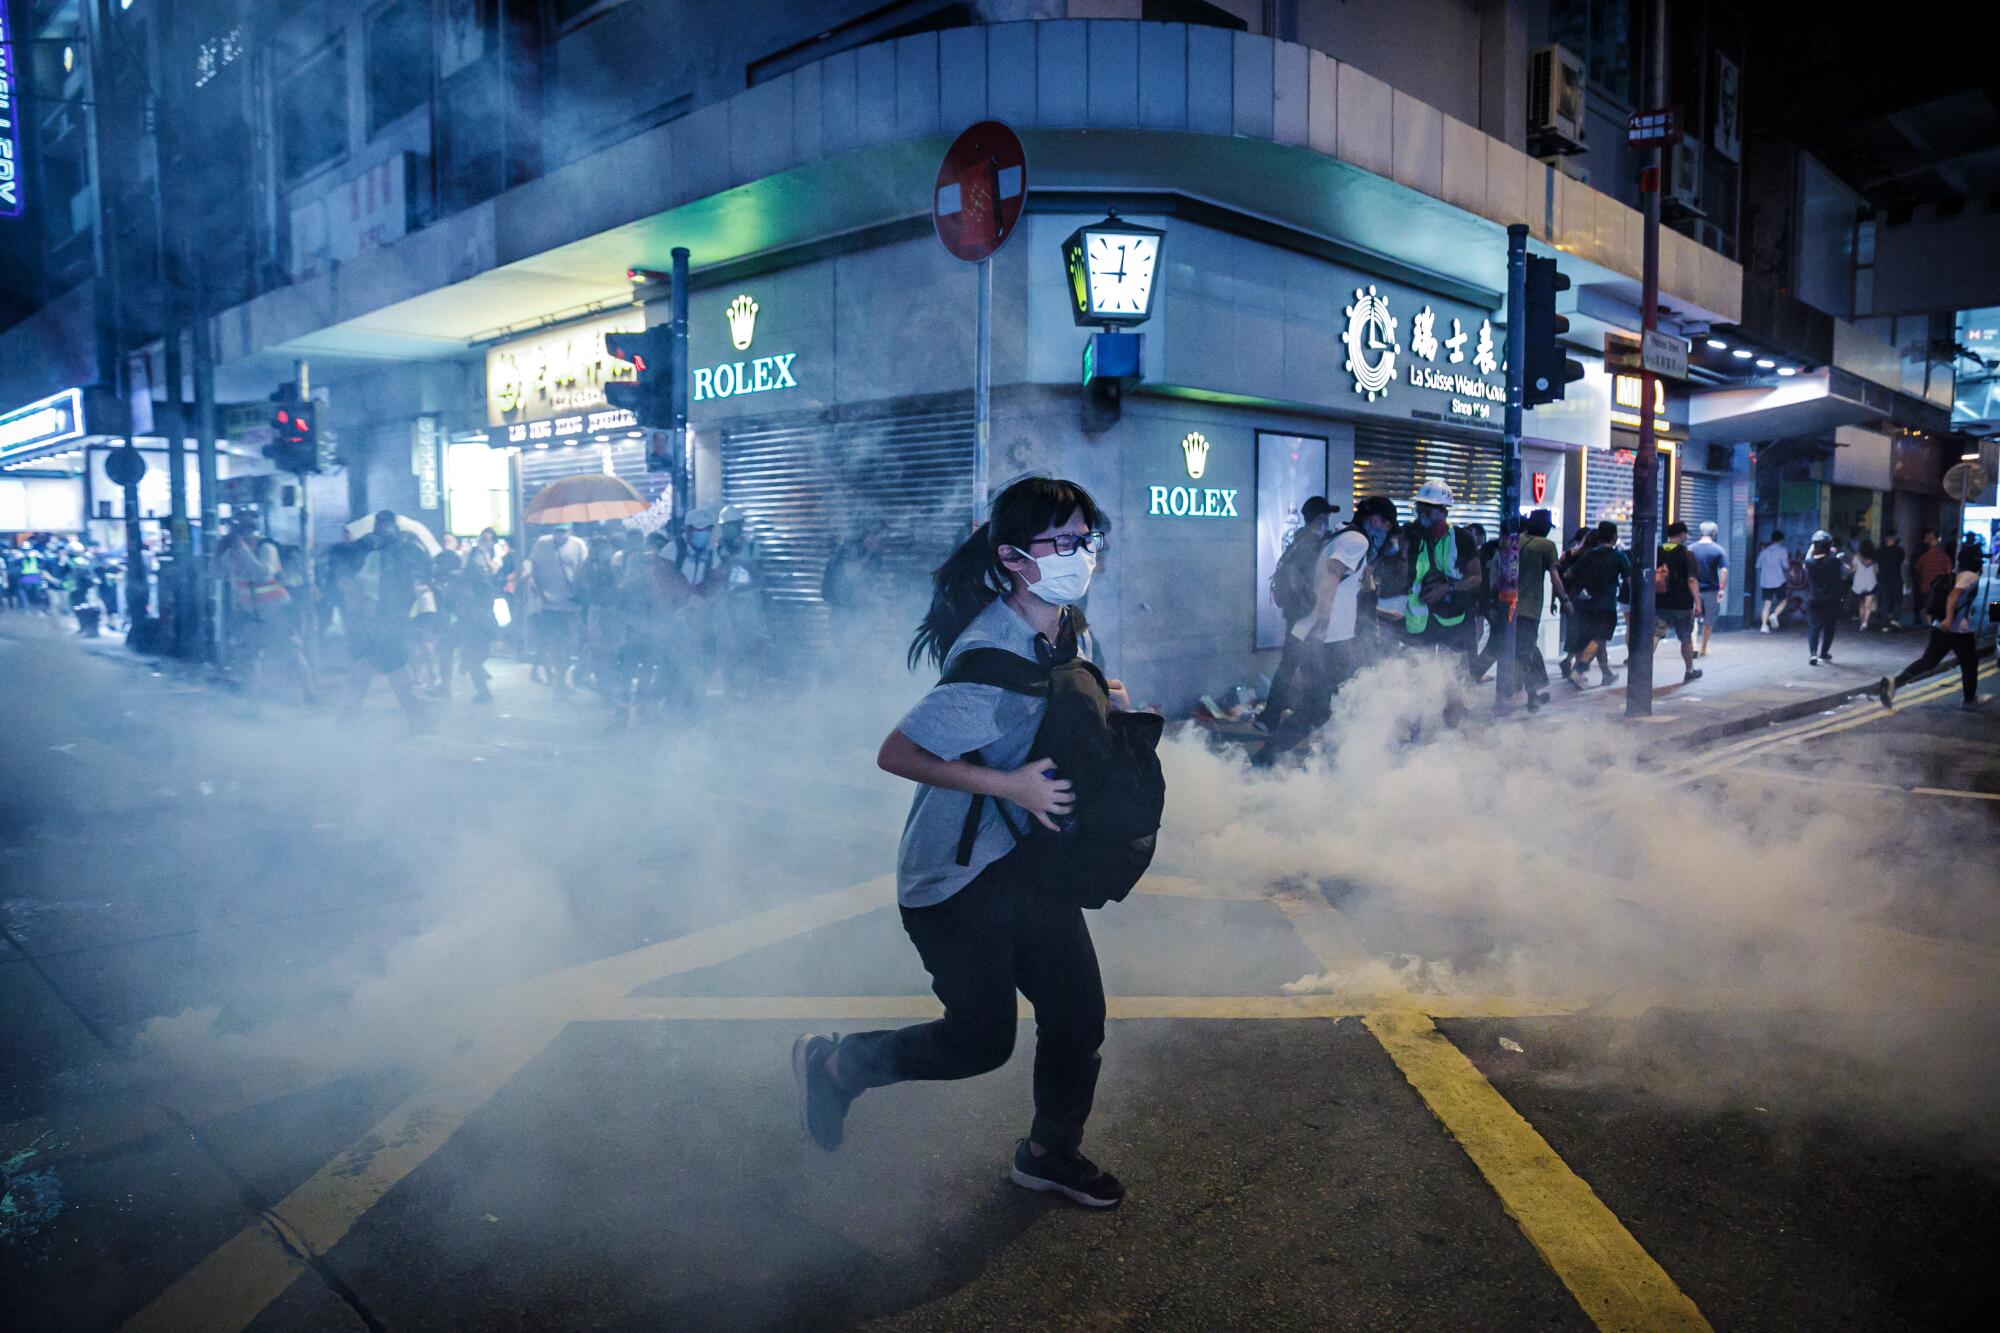 A woman runs through tear gas on a city street 